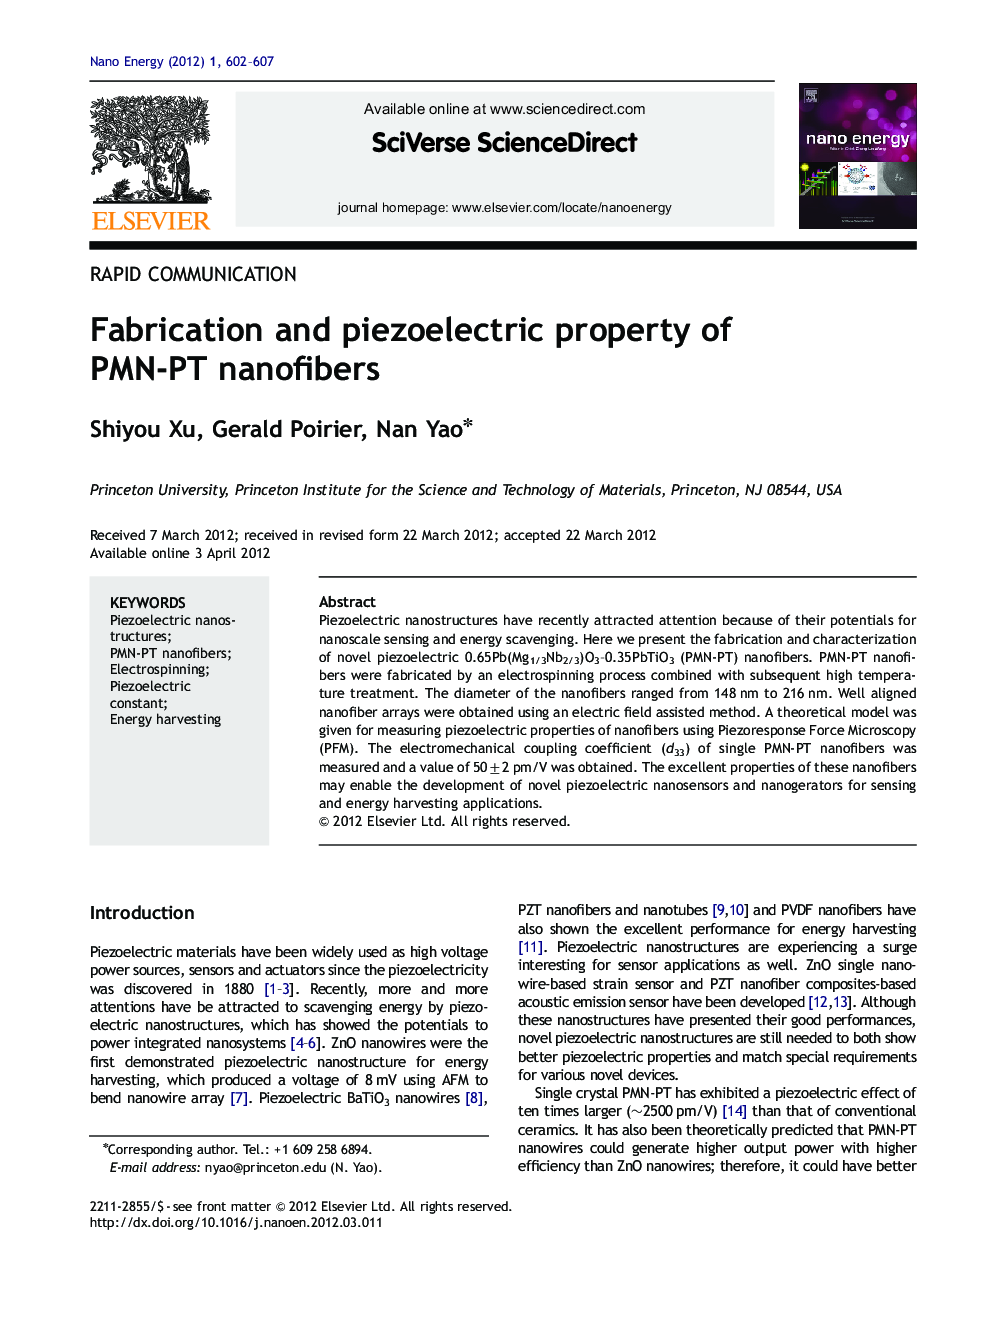 Fabrication and piezoelectric property of PMN-PT nanofibers